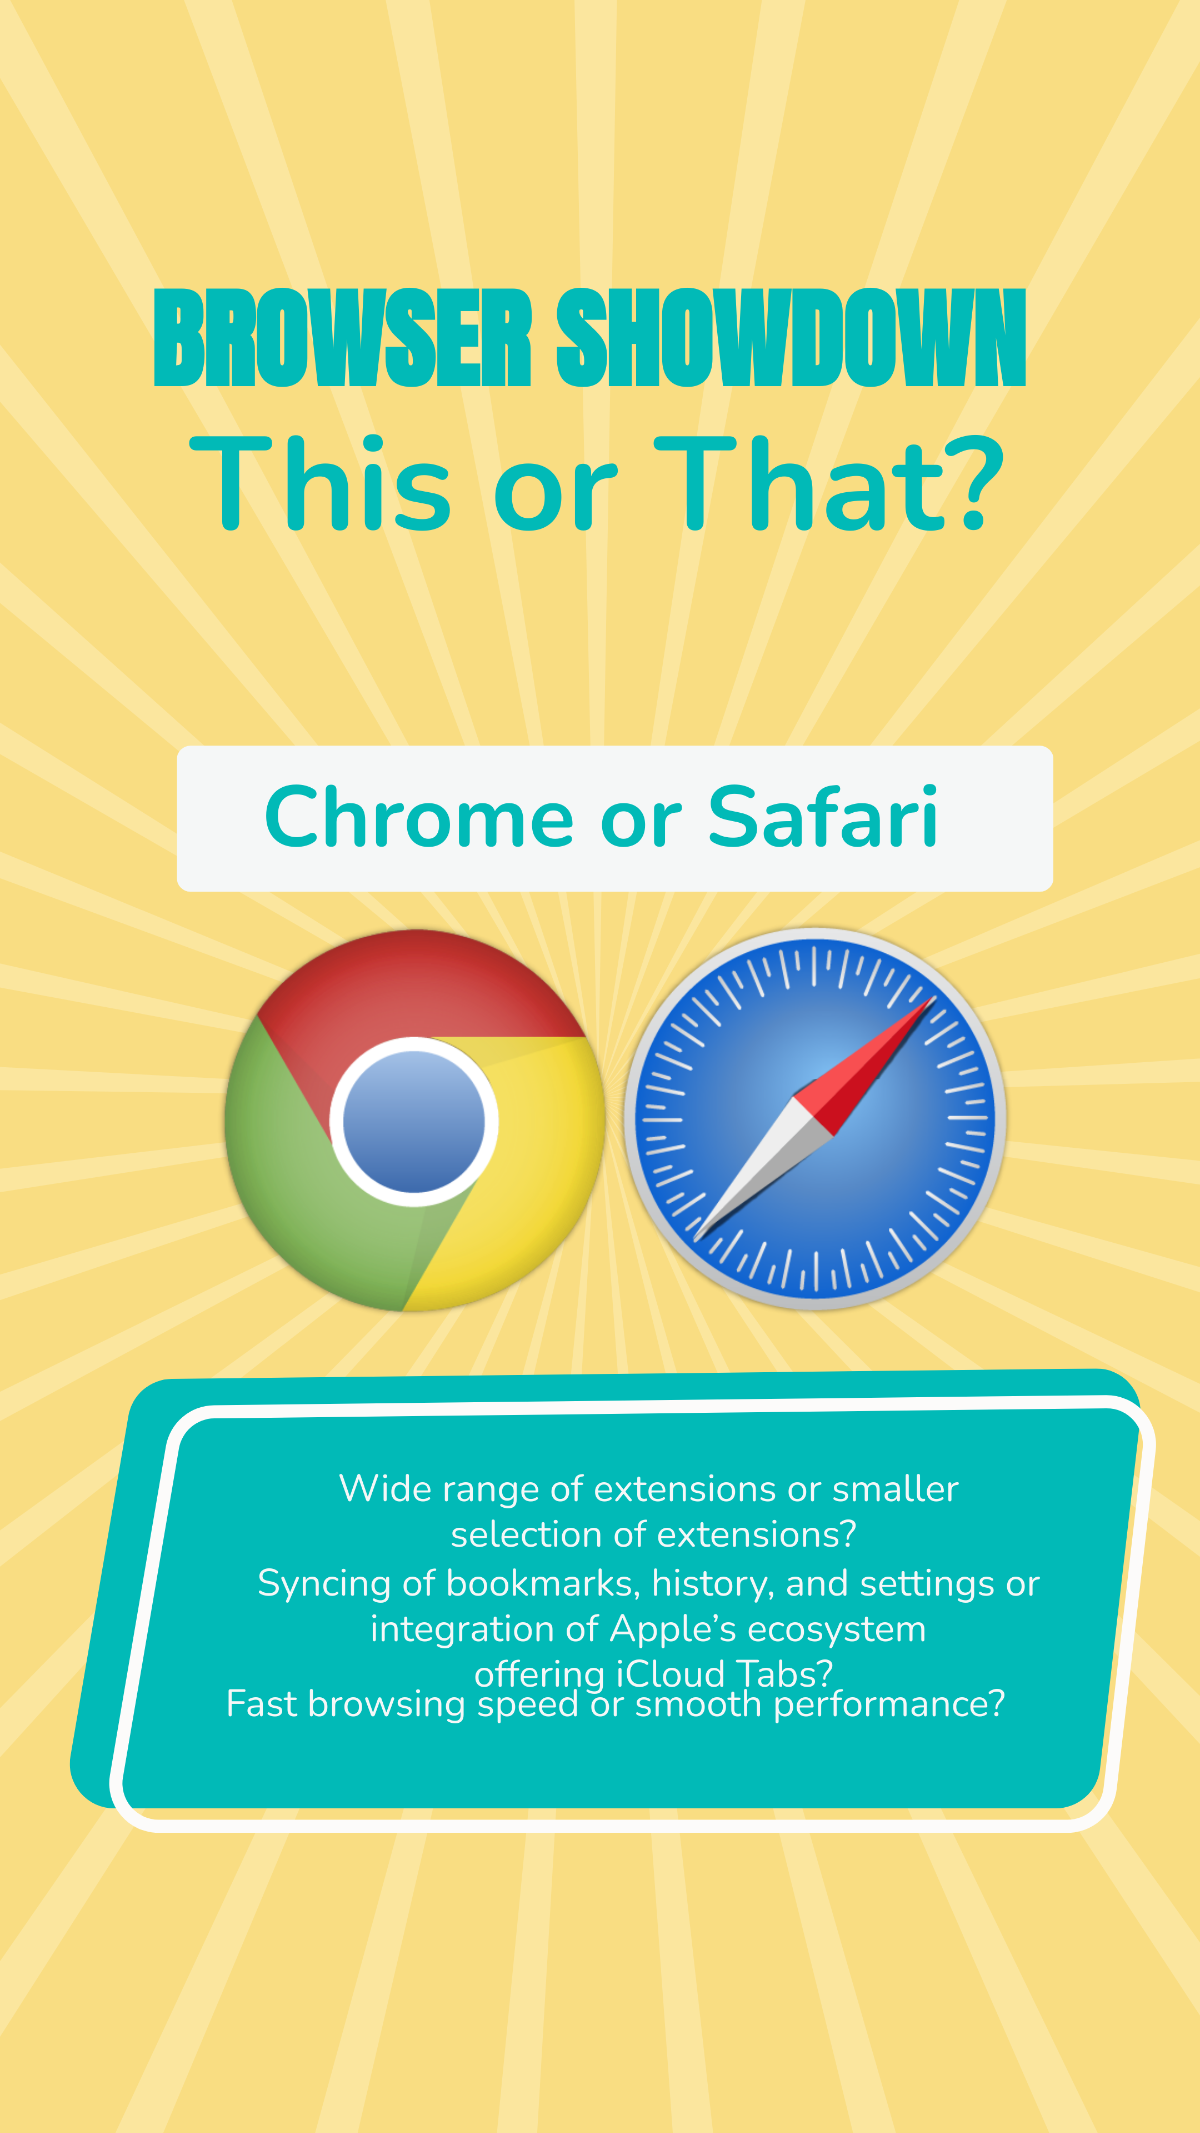 Chrome or Safari This or That Template